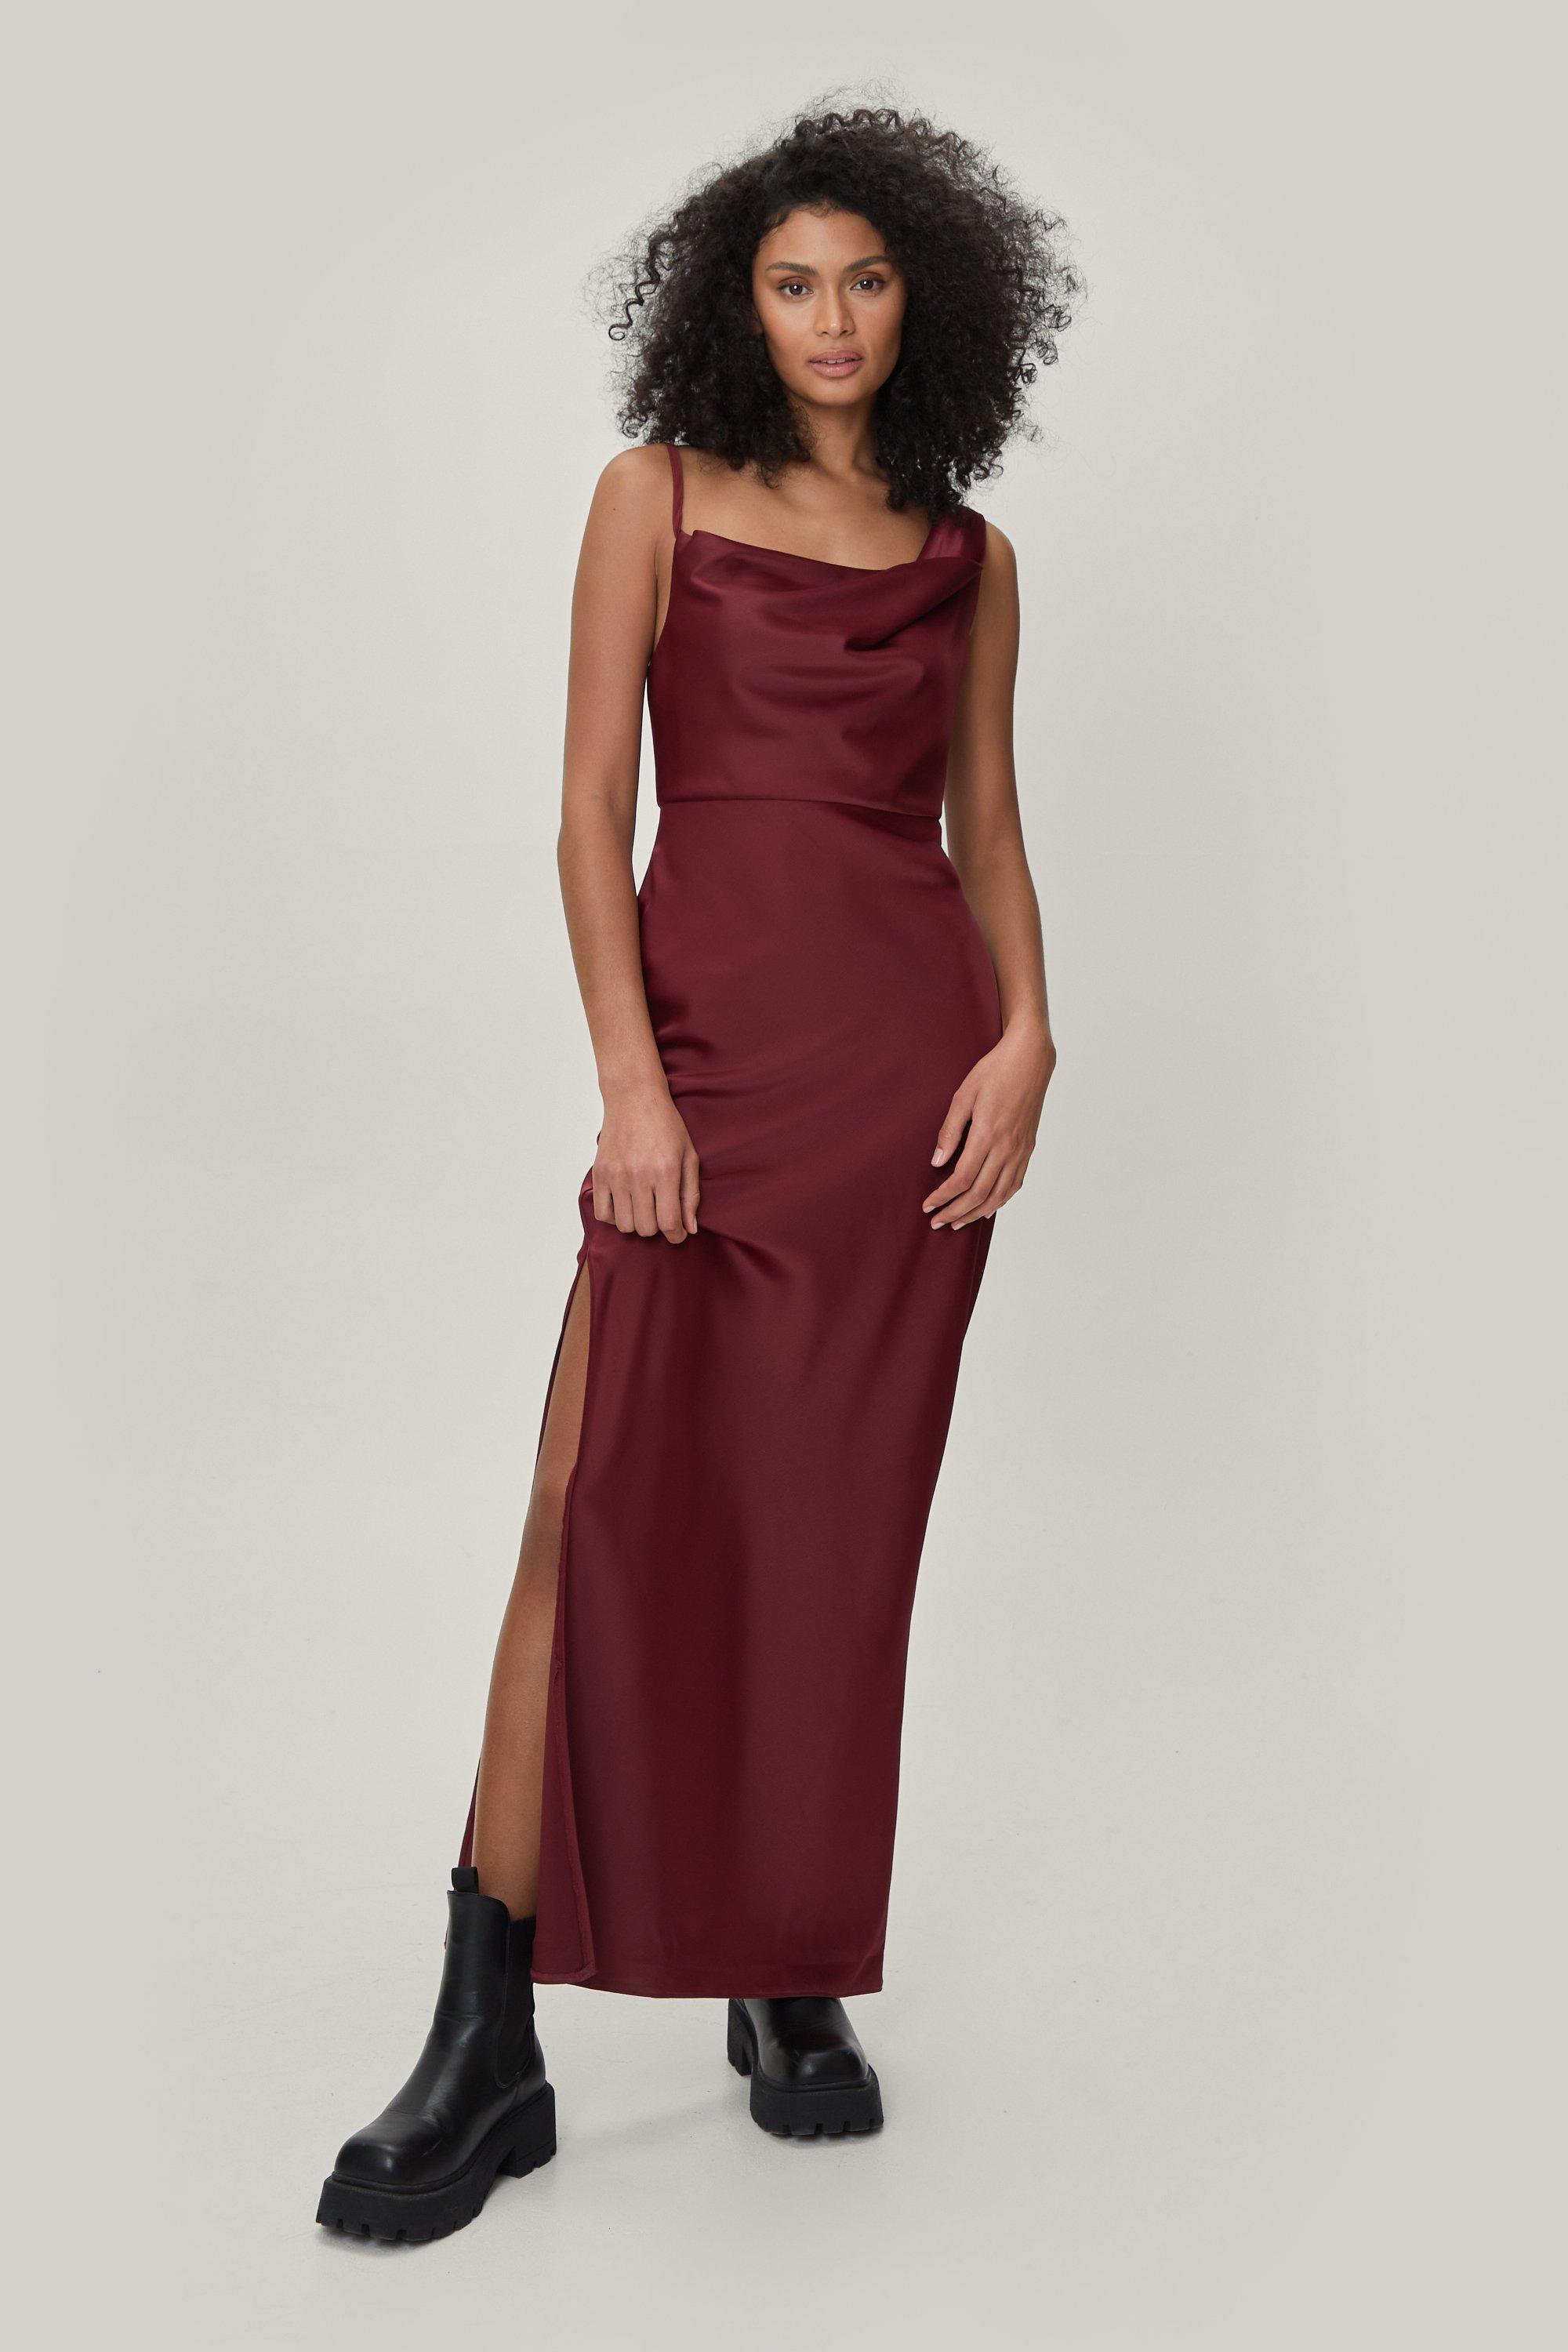 Red Dresses | Burgundy ☀ Maroon Dresses ...